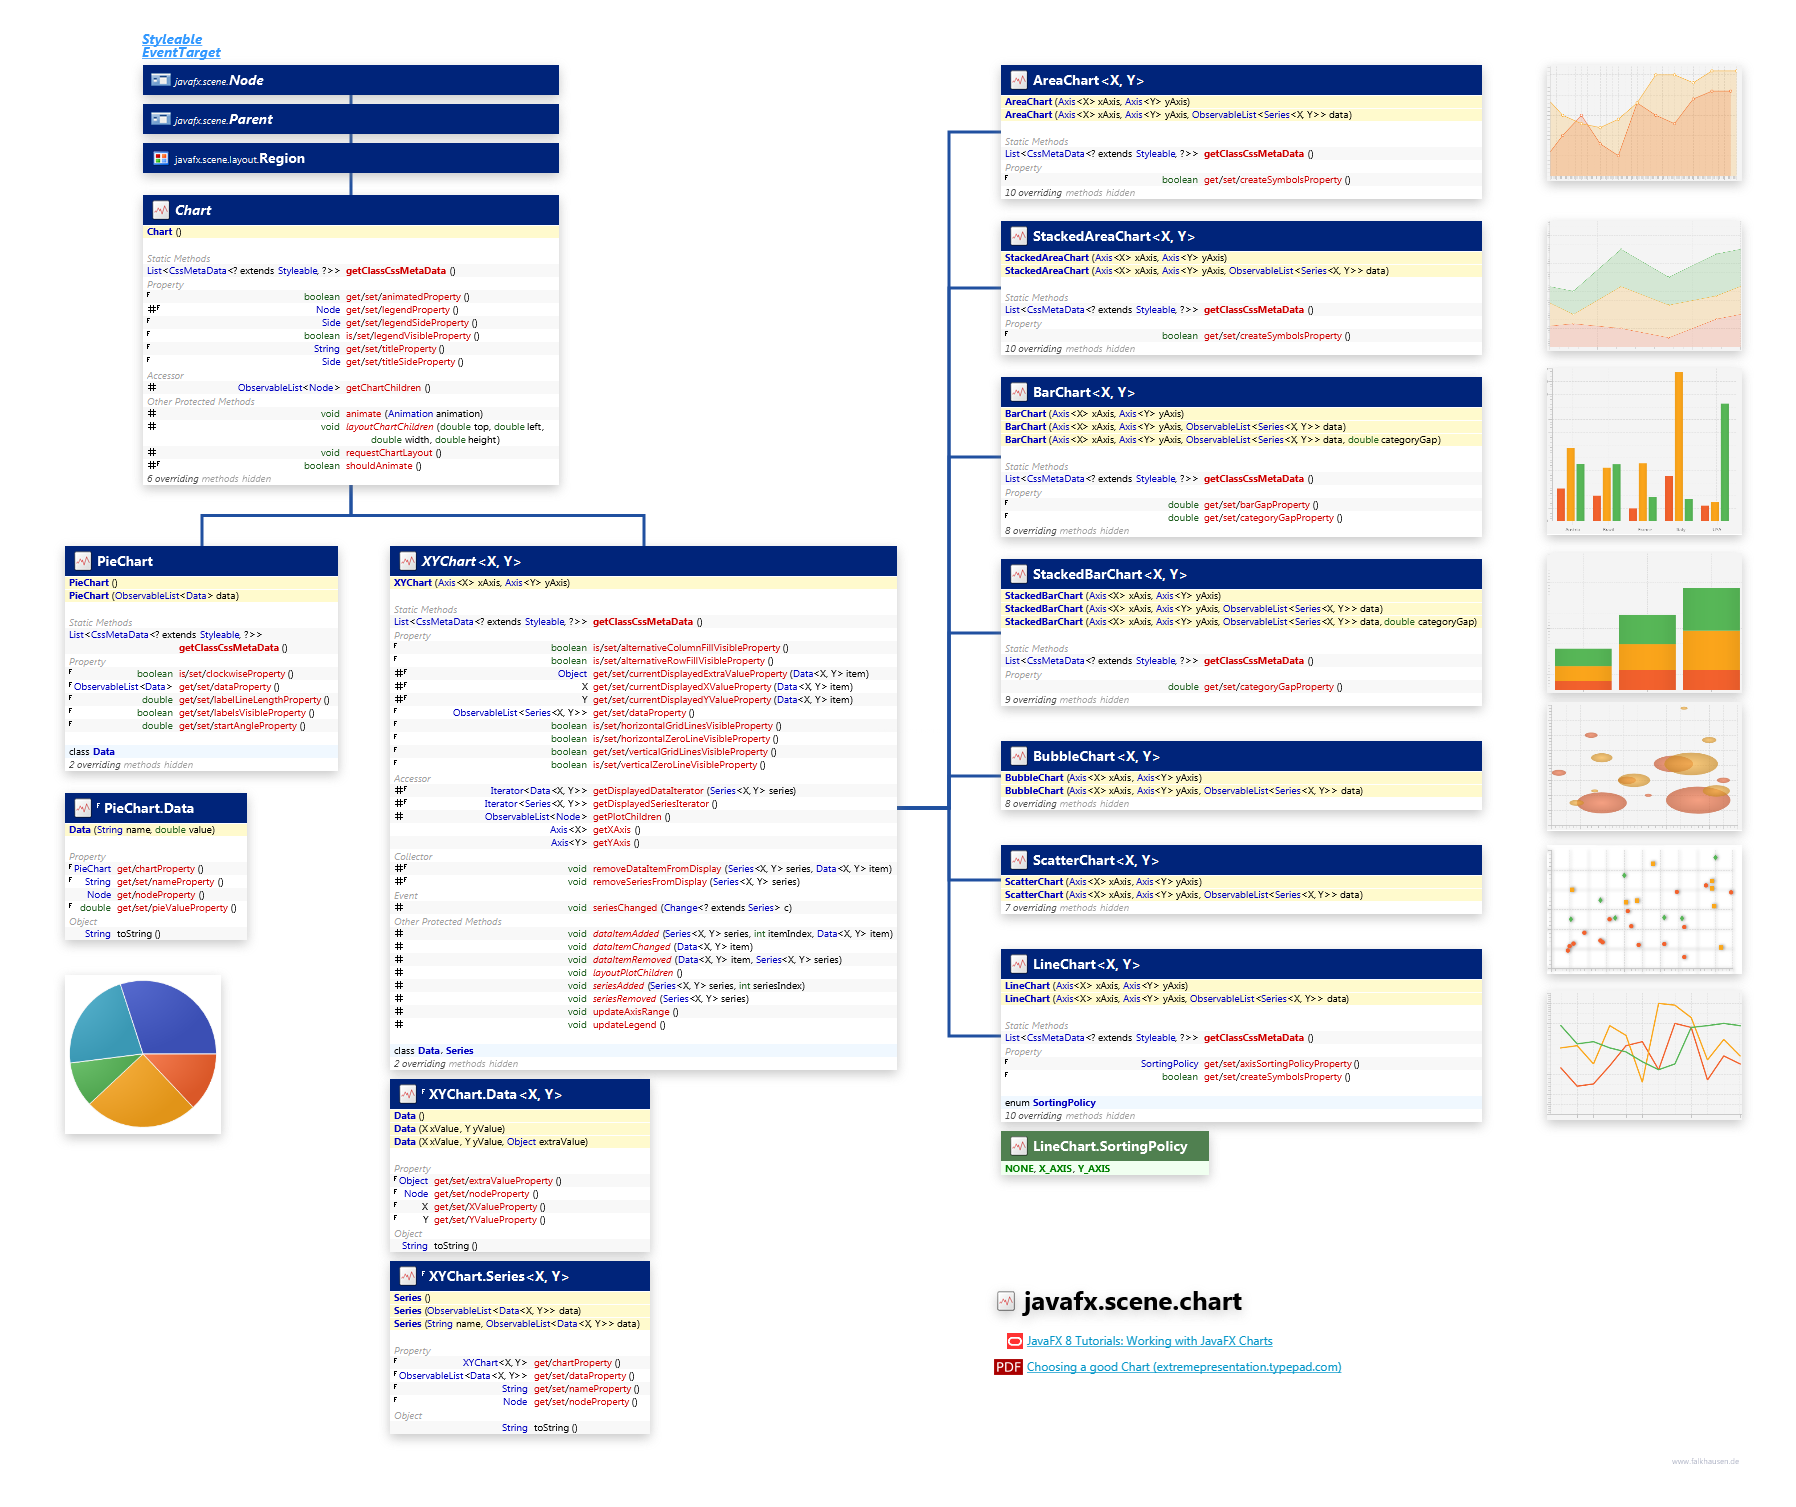 javafx.scene.chart Chart class diagram and api documentation for JavaFX 8